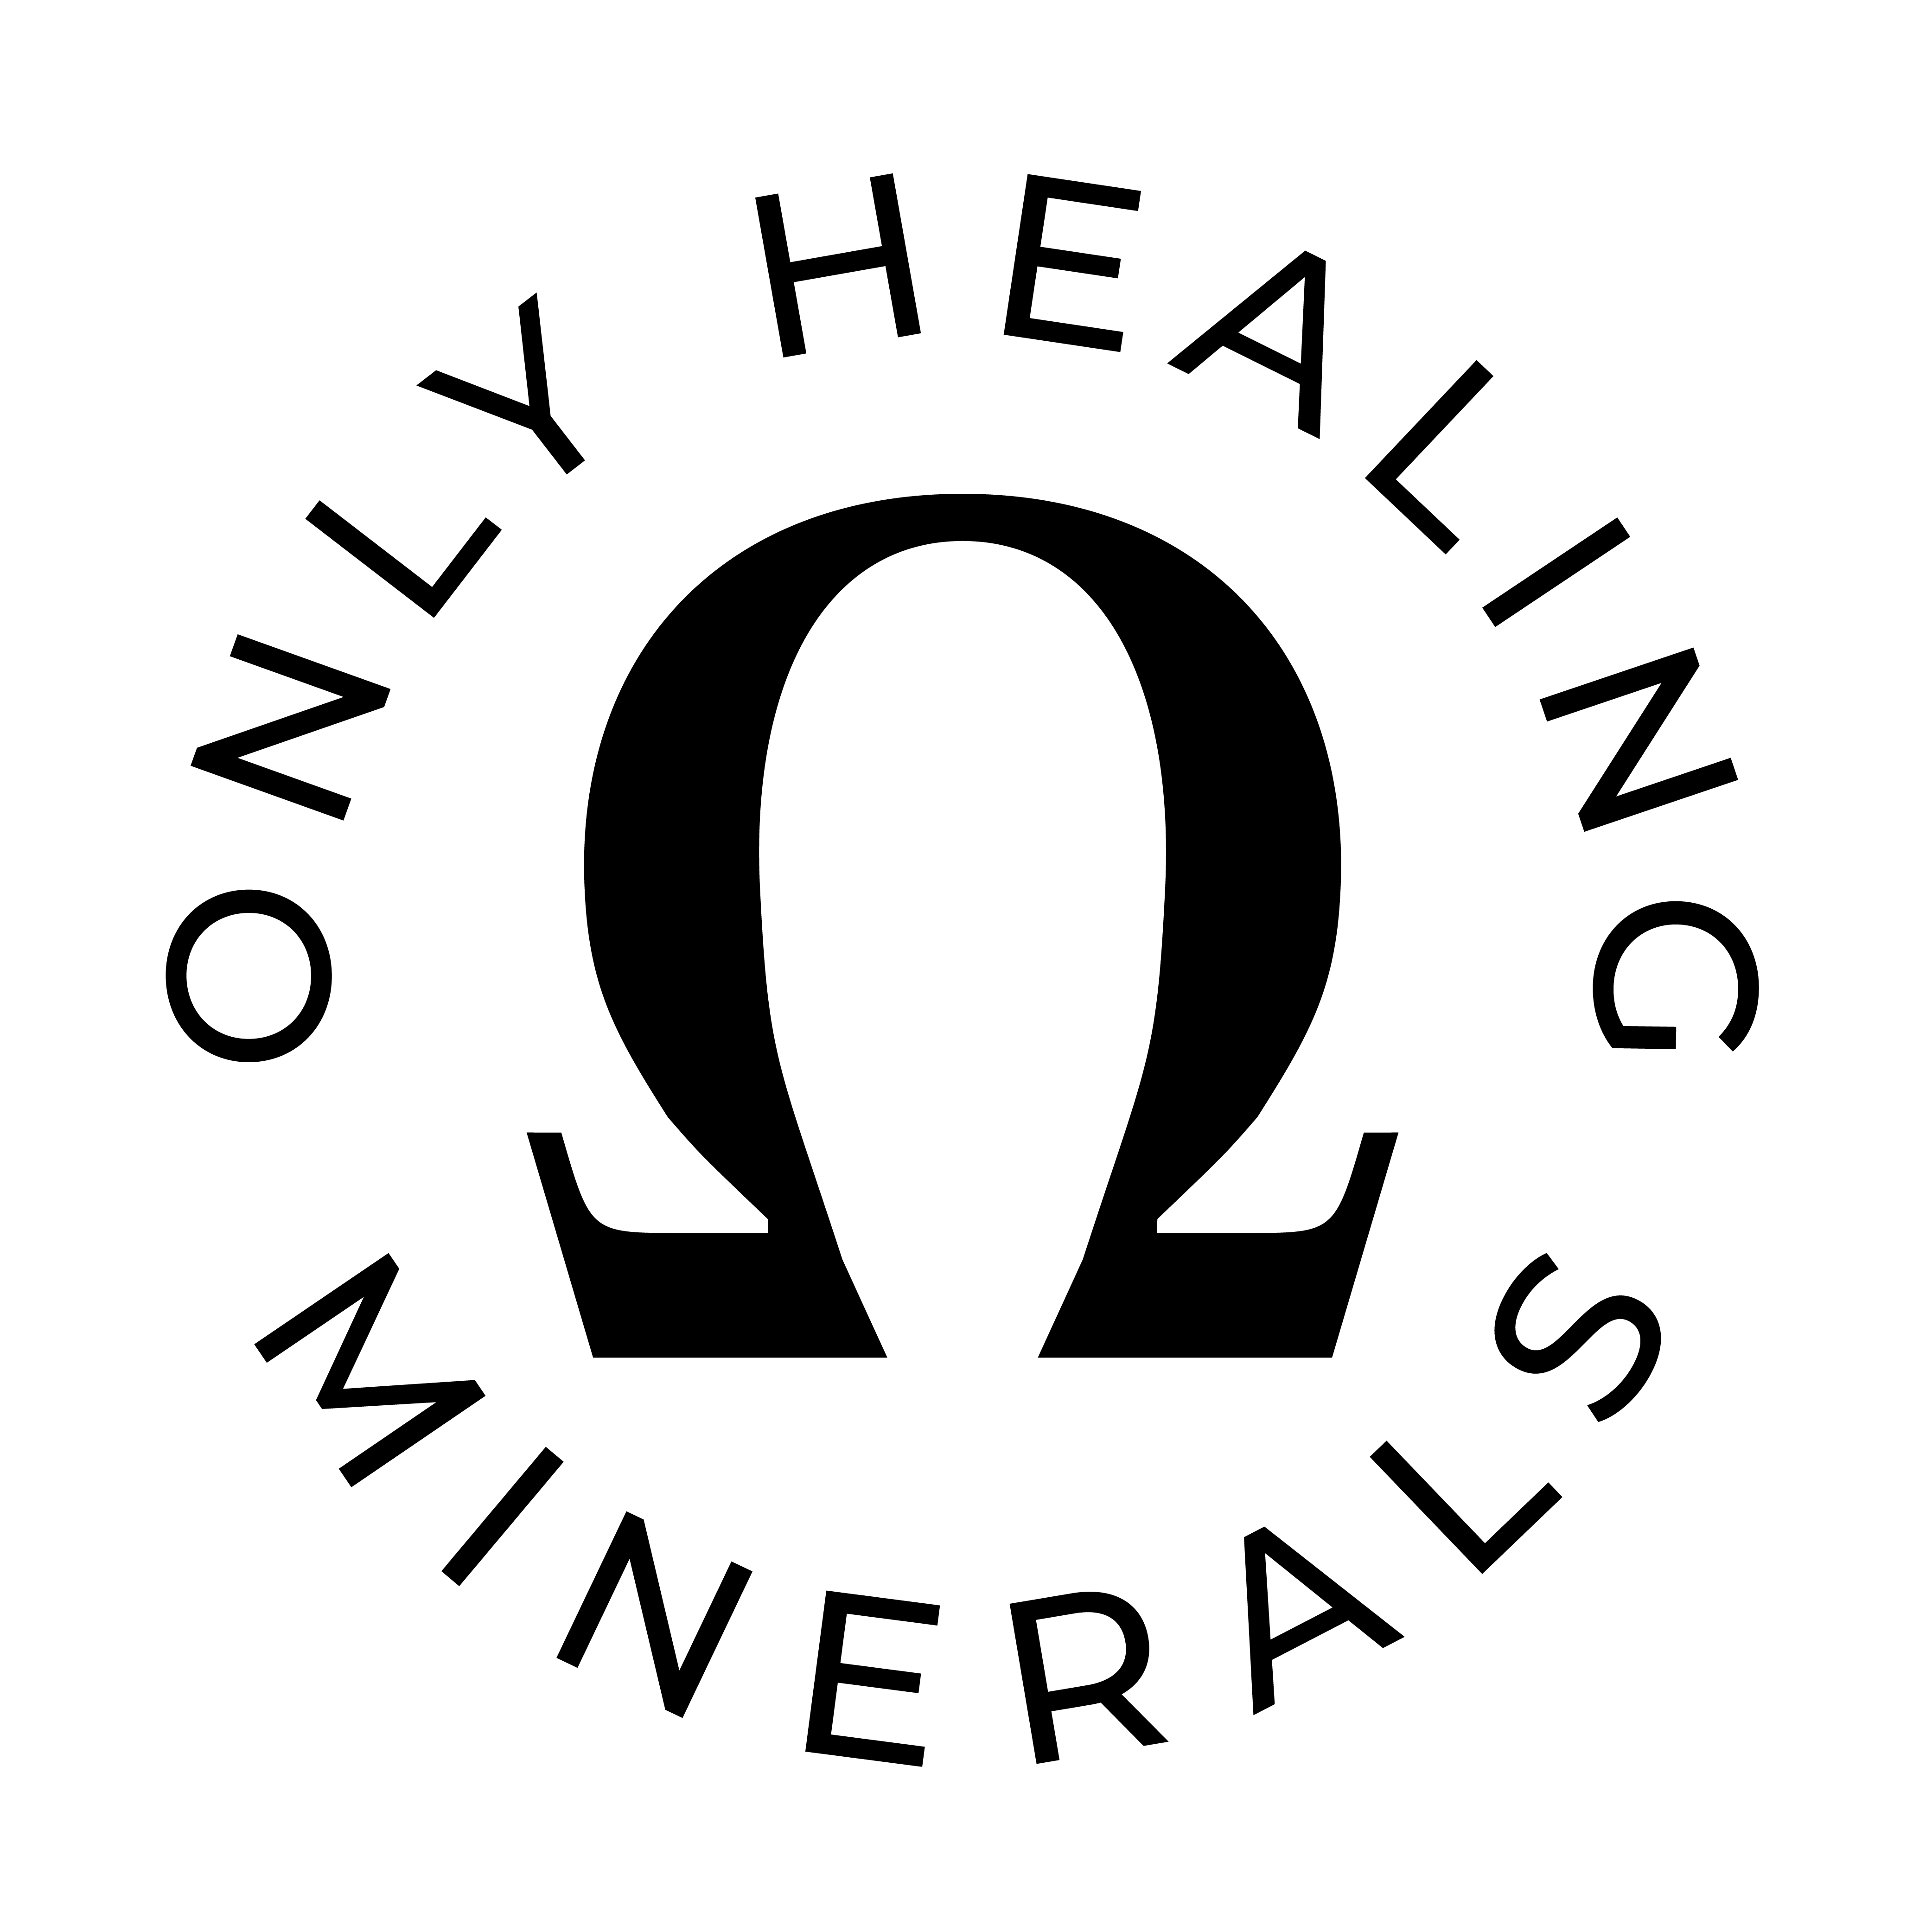 Ohm Logo